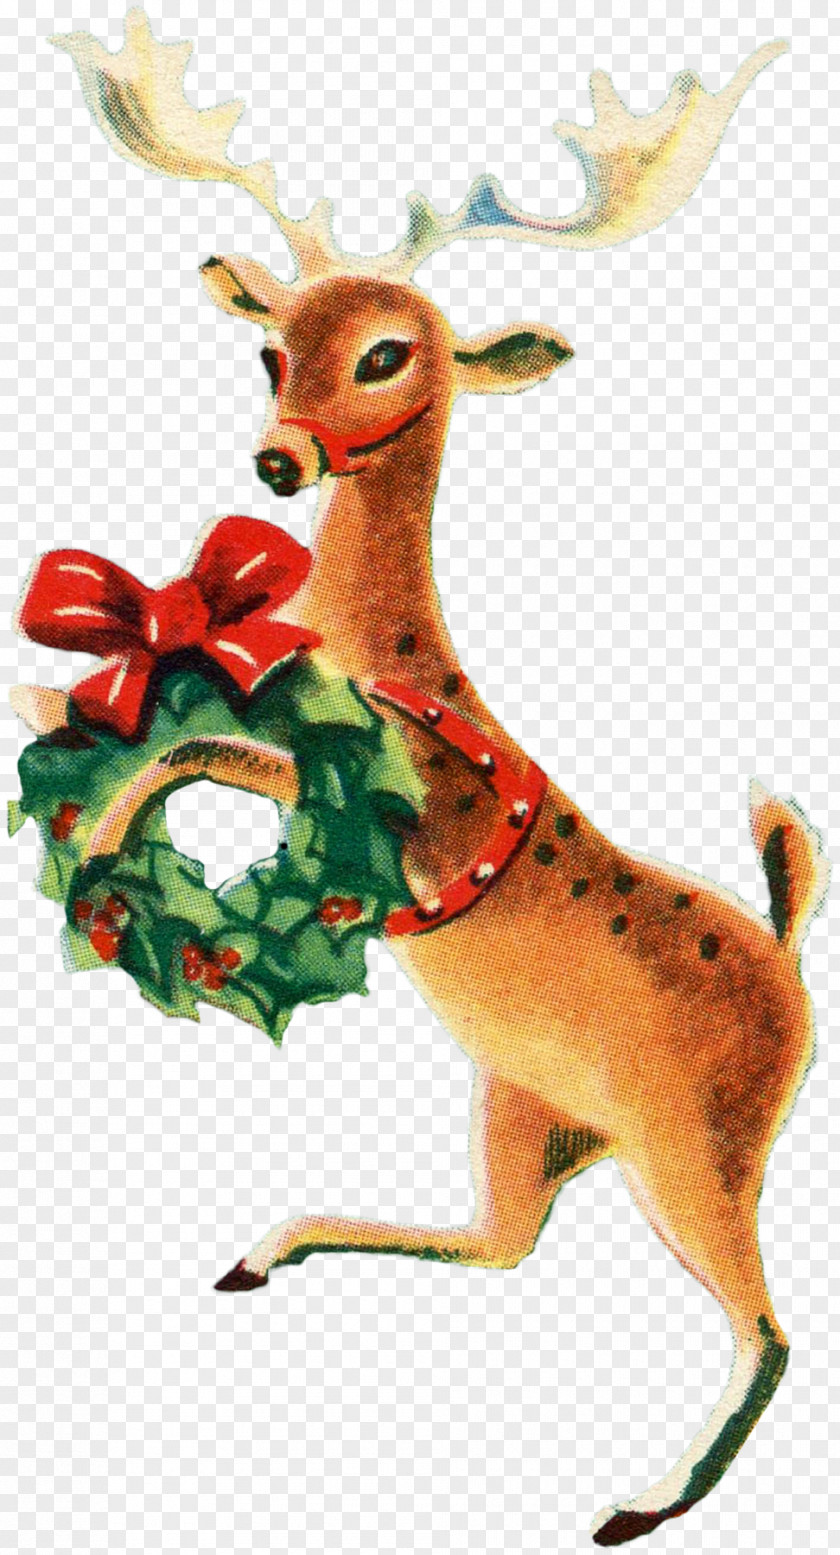 Blue Wreath Reindeer Christmas Ornament Decoration Antler PNG